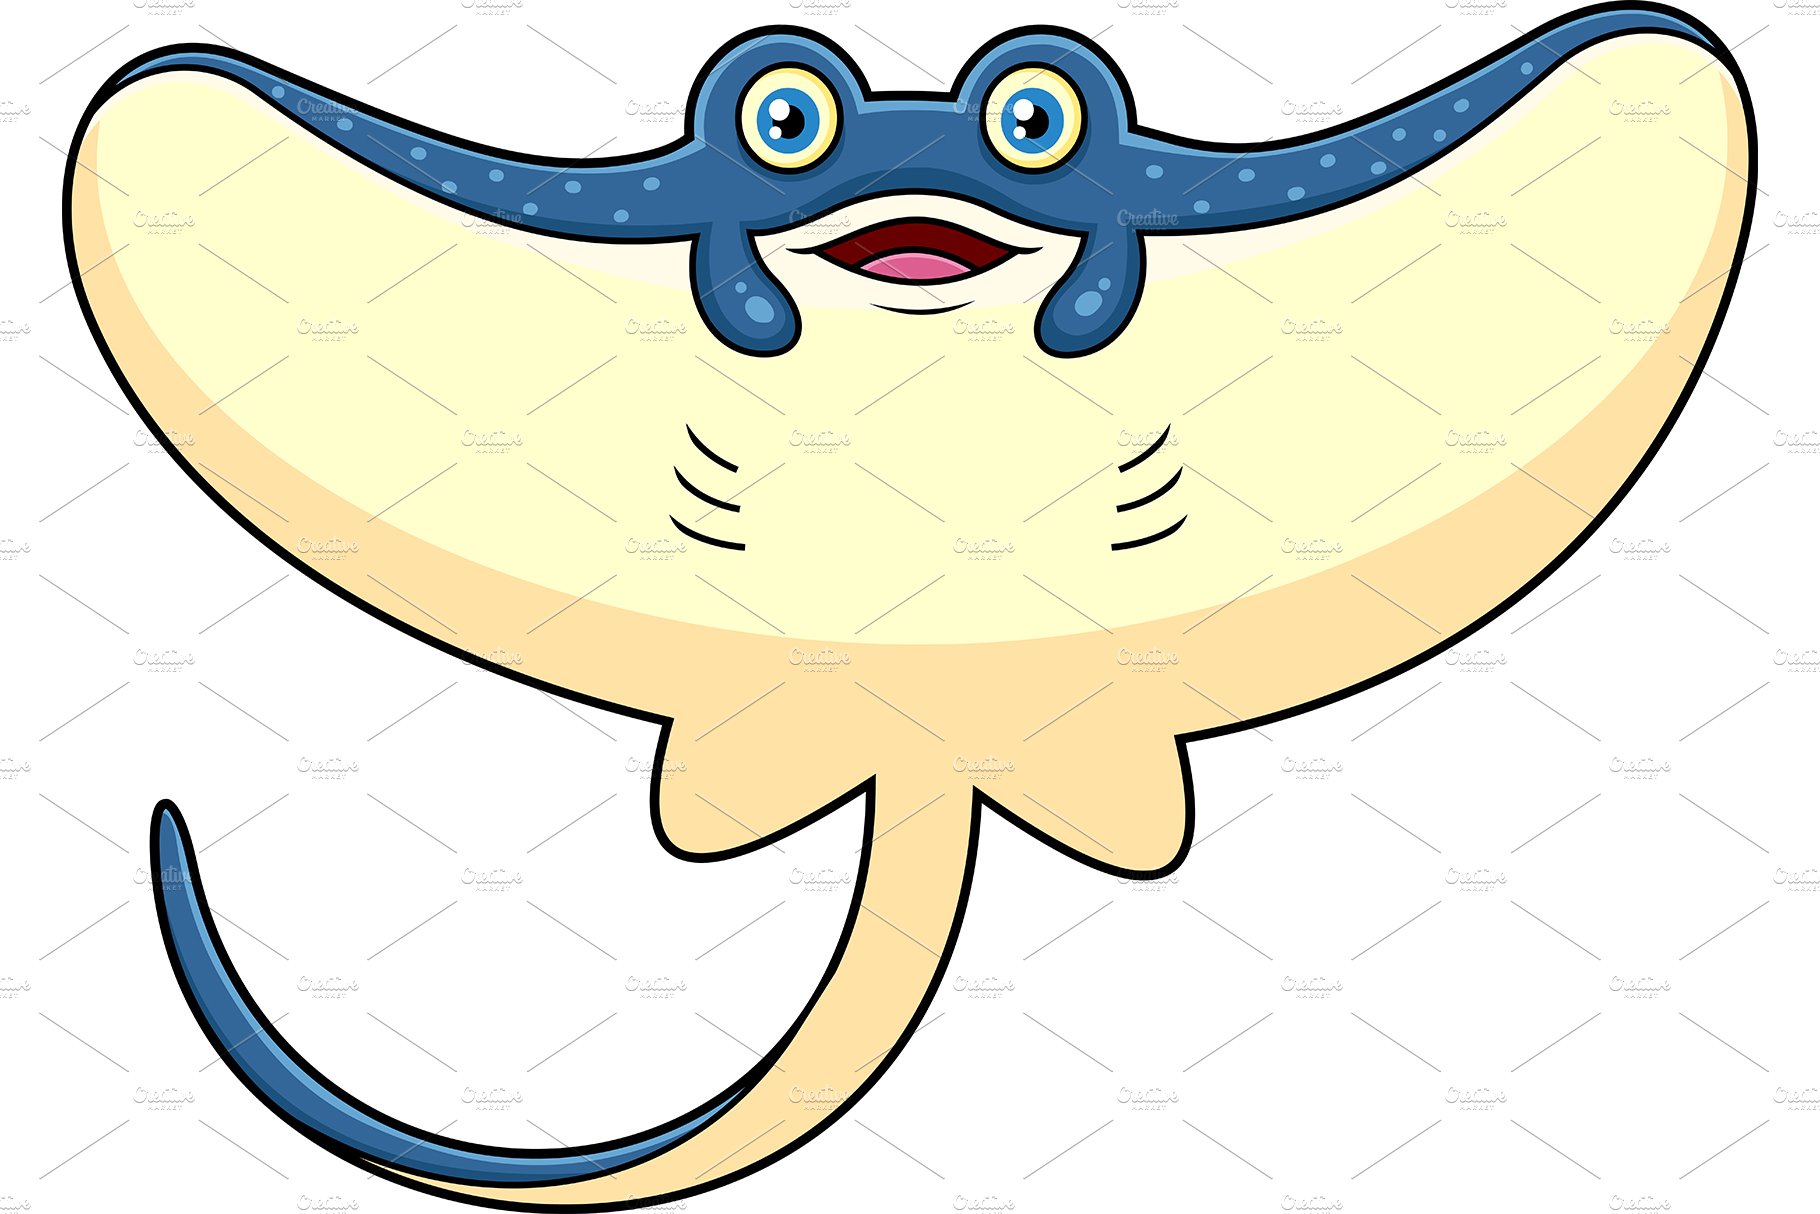 Cute Stingray Fish Cartoon Character cover image.